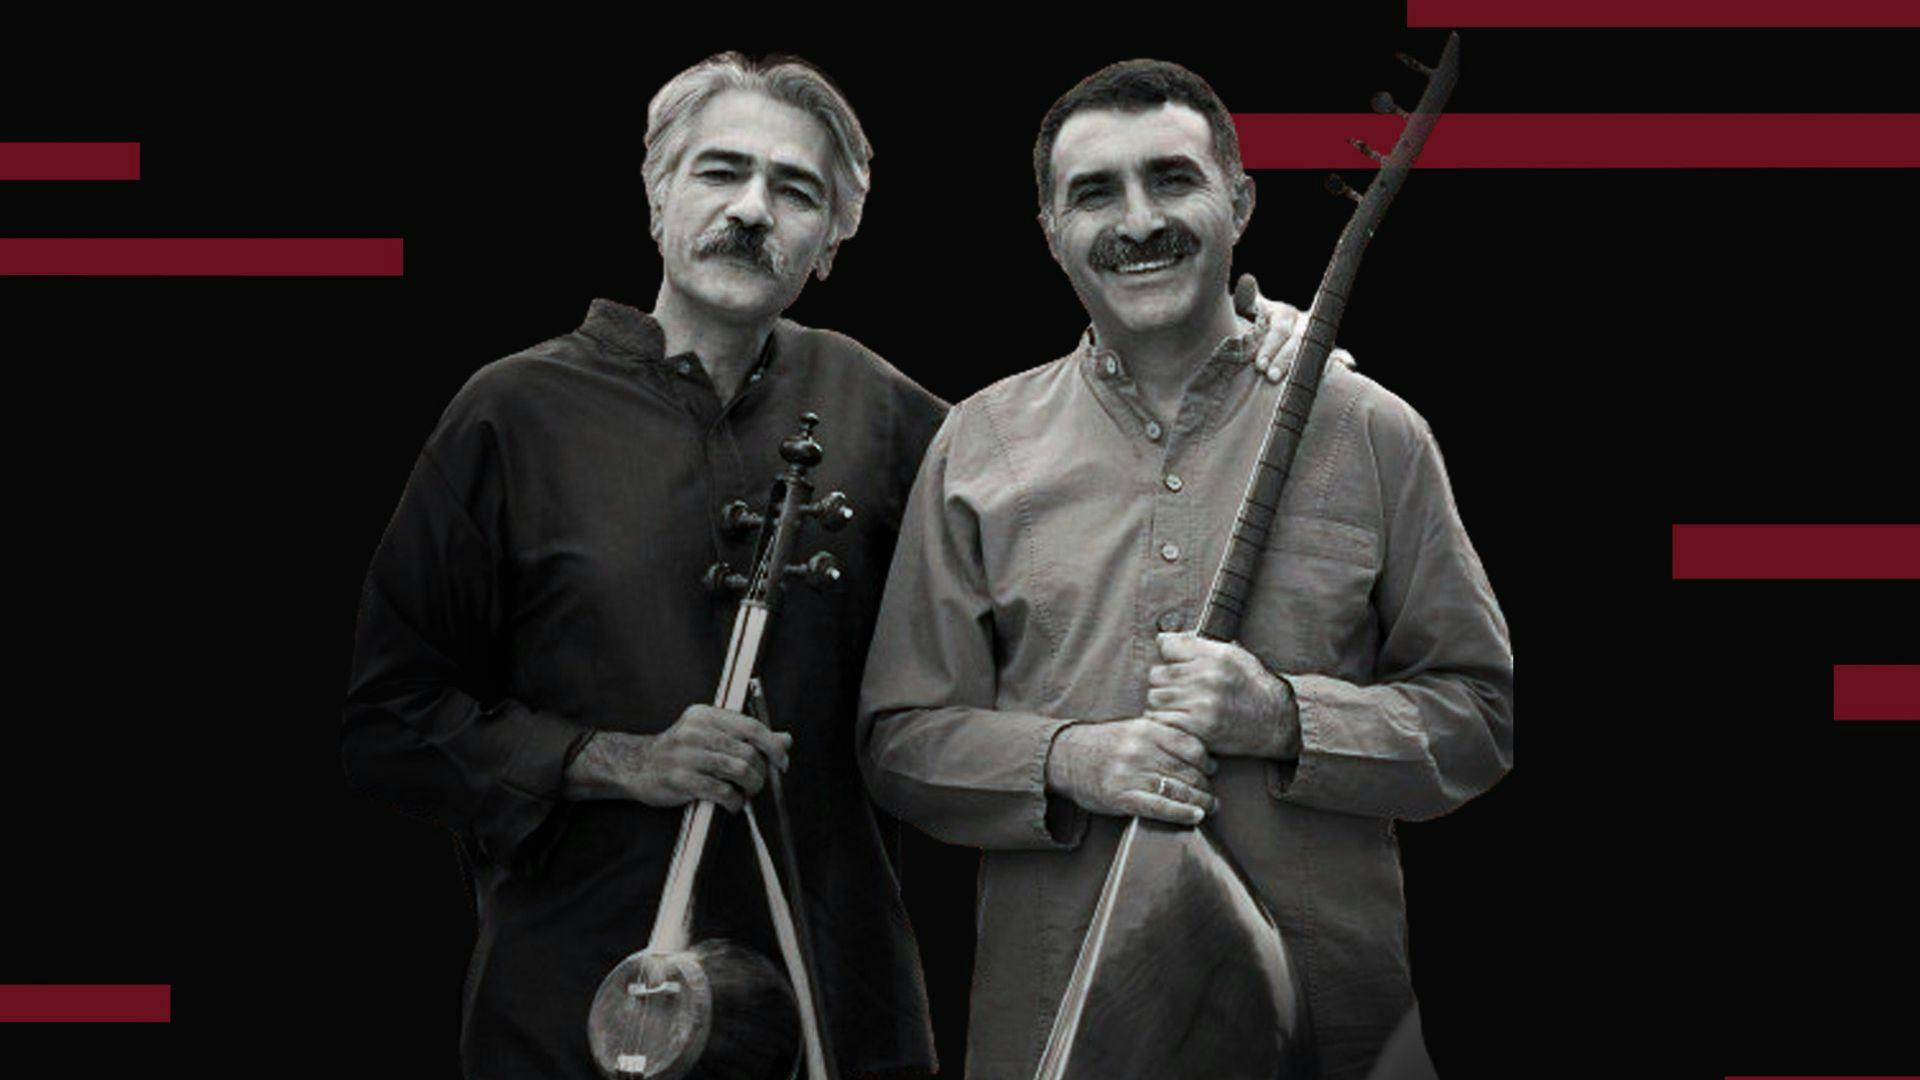 Requiem forJustice met Kayhan Kalhor + Erdal Erzincan